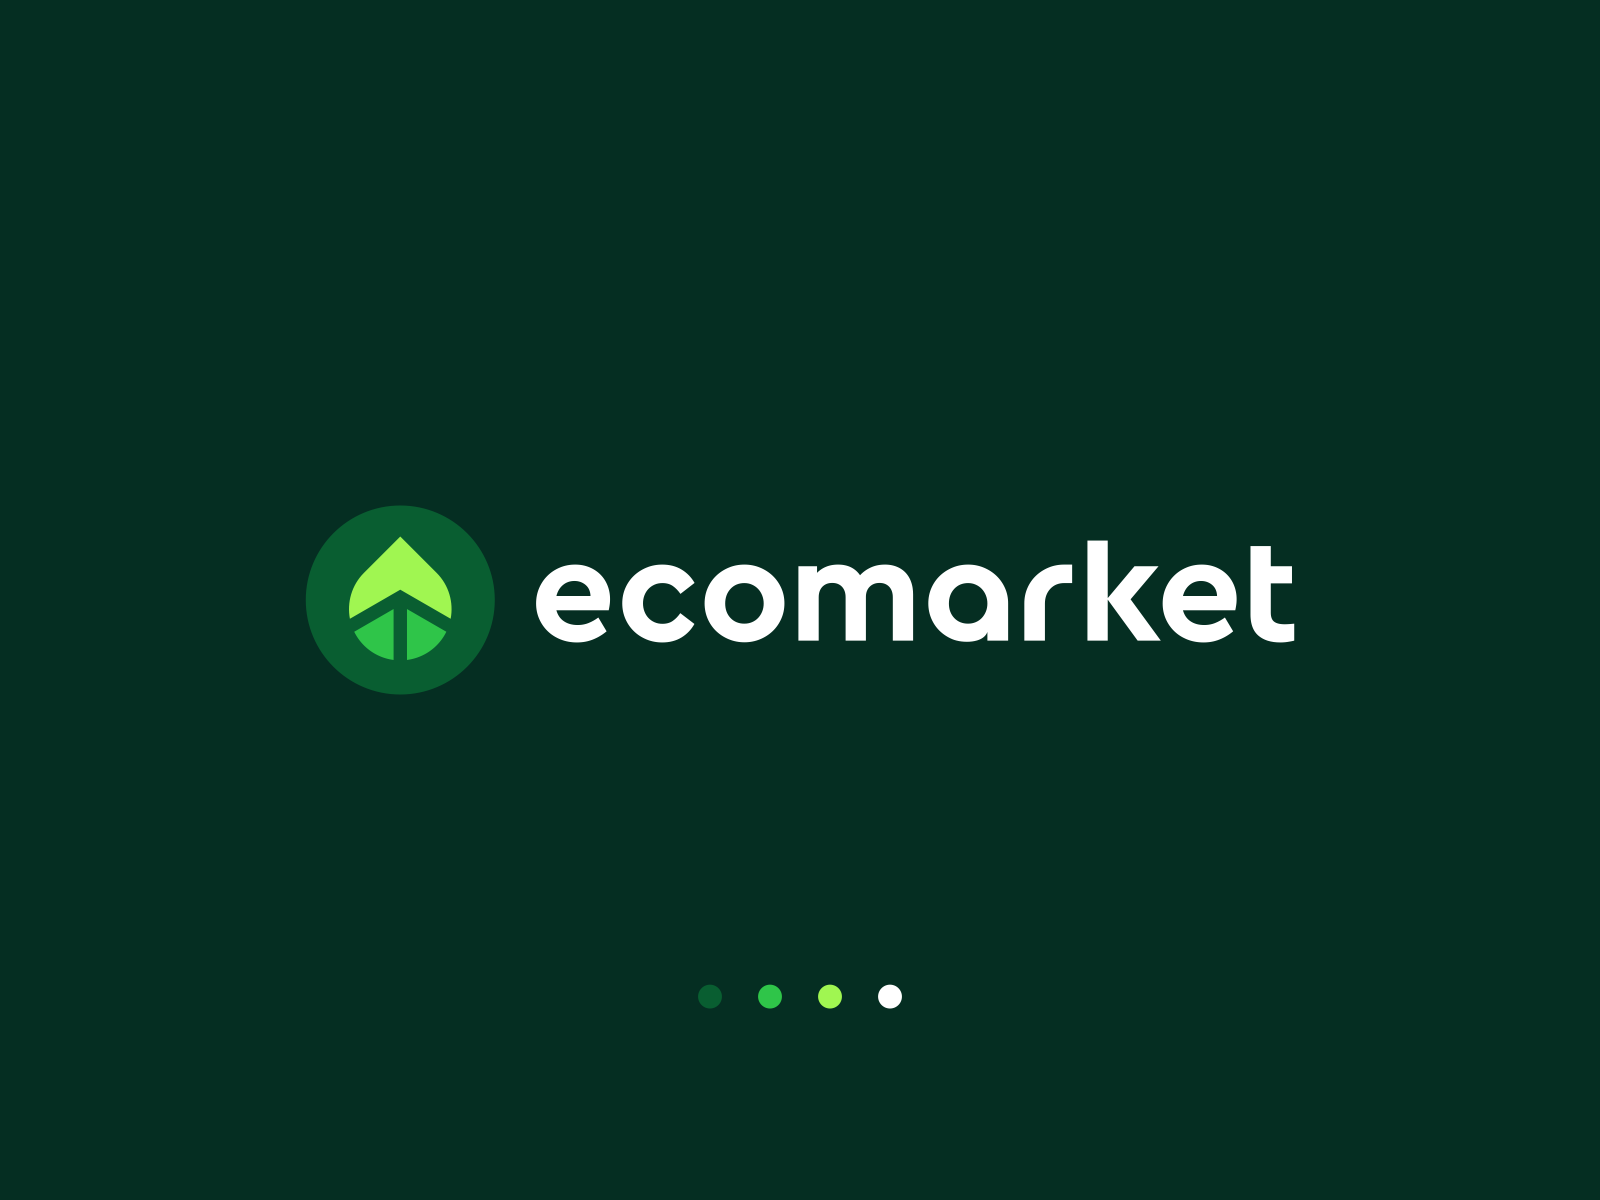 Ecomarket Logo Design - Leaf / Drop / Arrow / Coin by Dalius